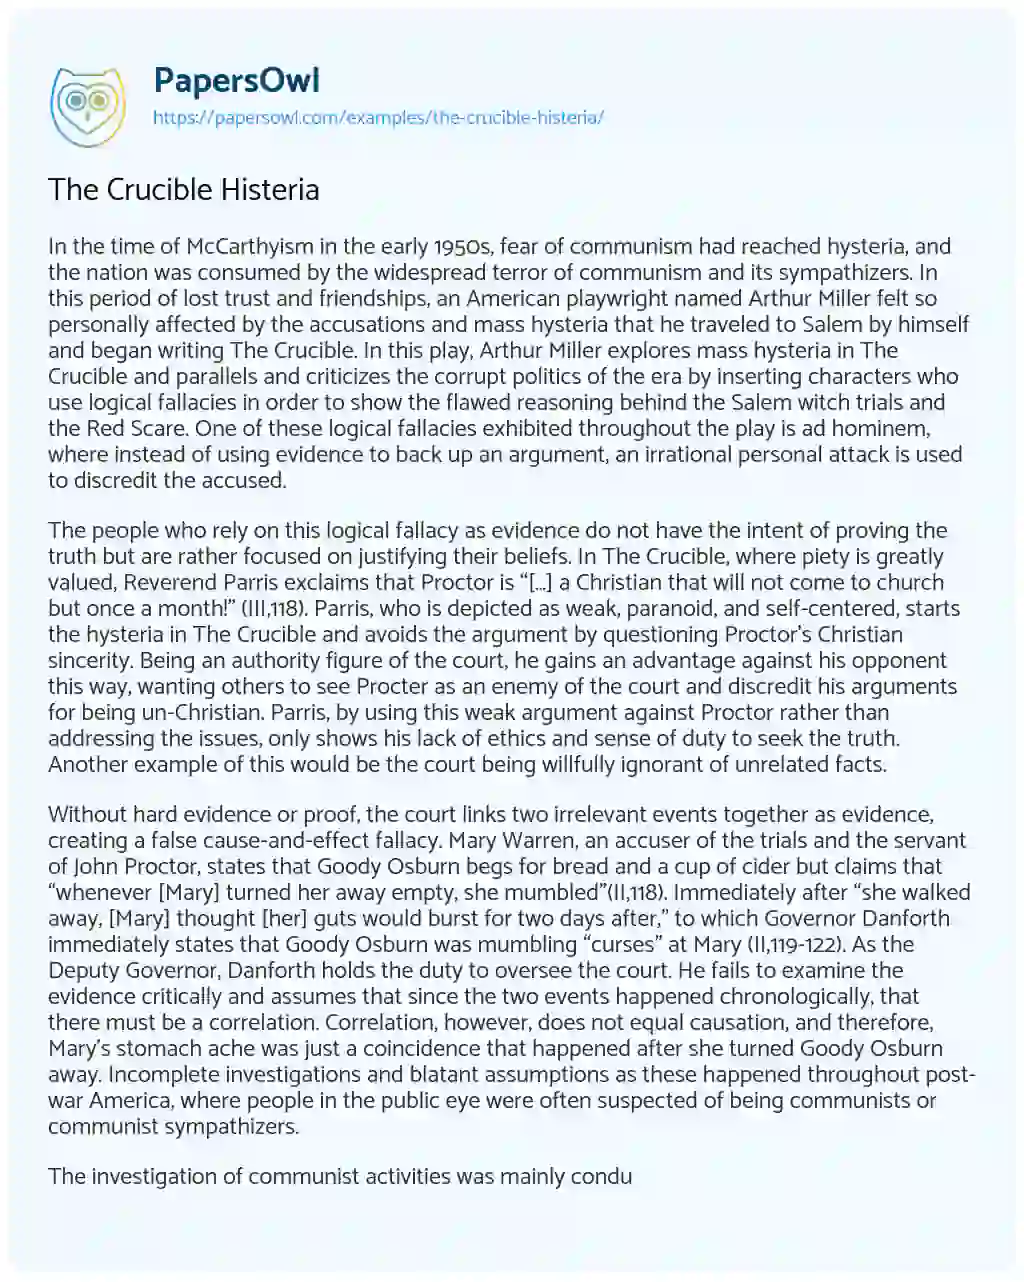 Essay on The Crucible Histeria